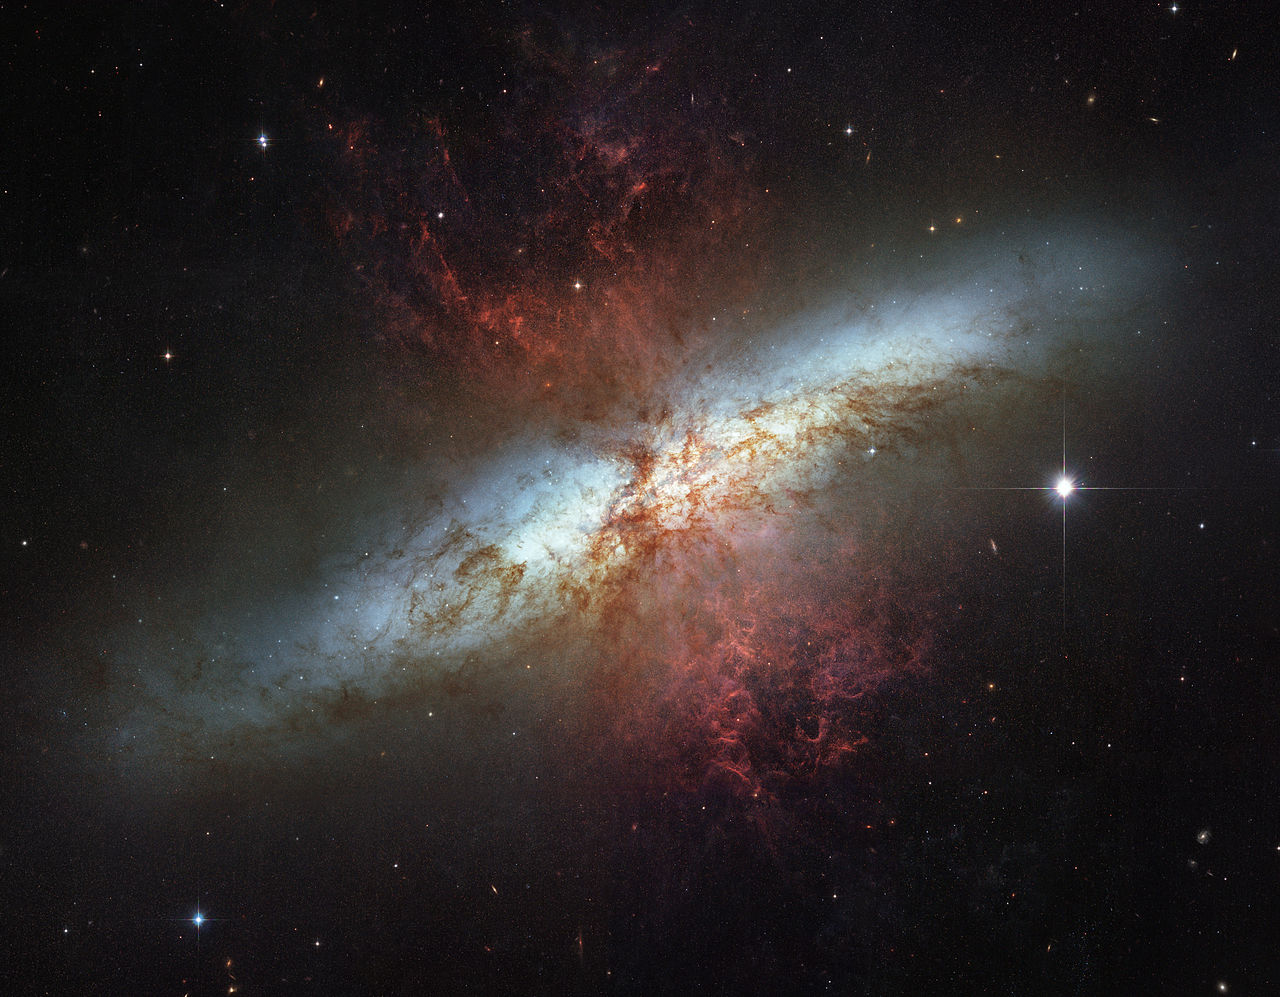 cigar galaxy,ngc 3036,starburst galaxy